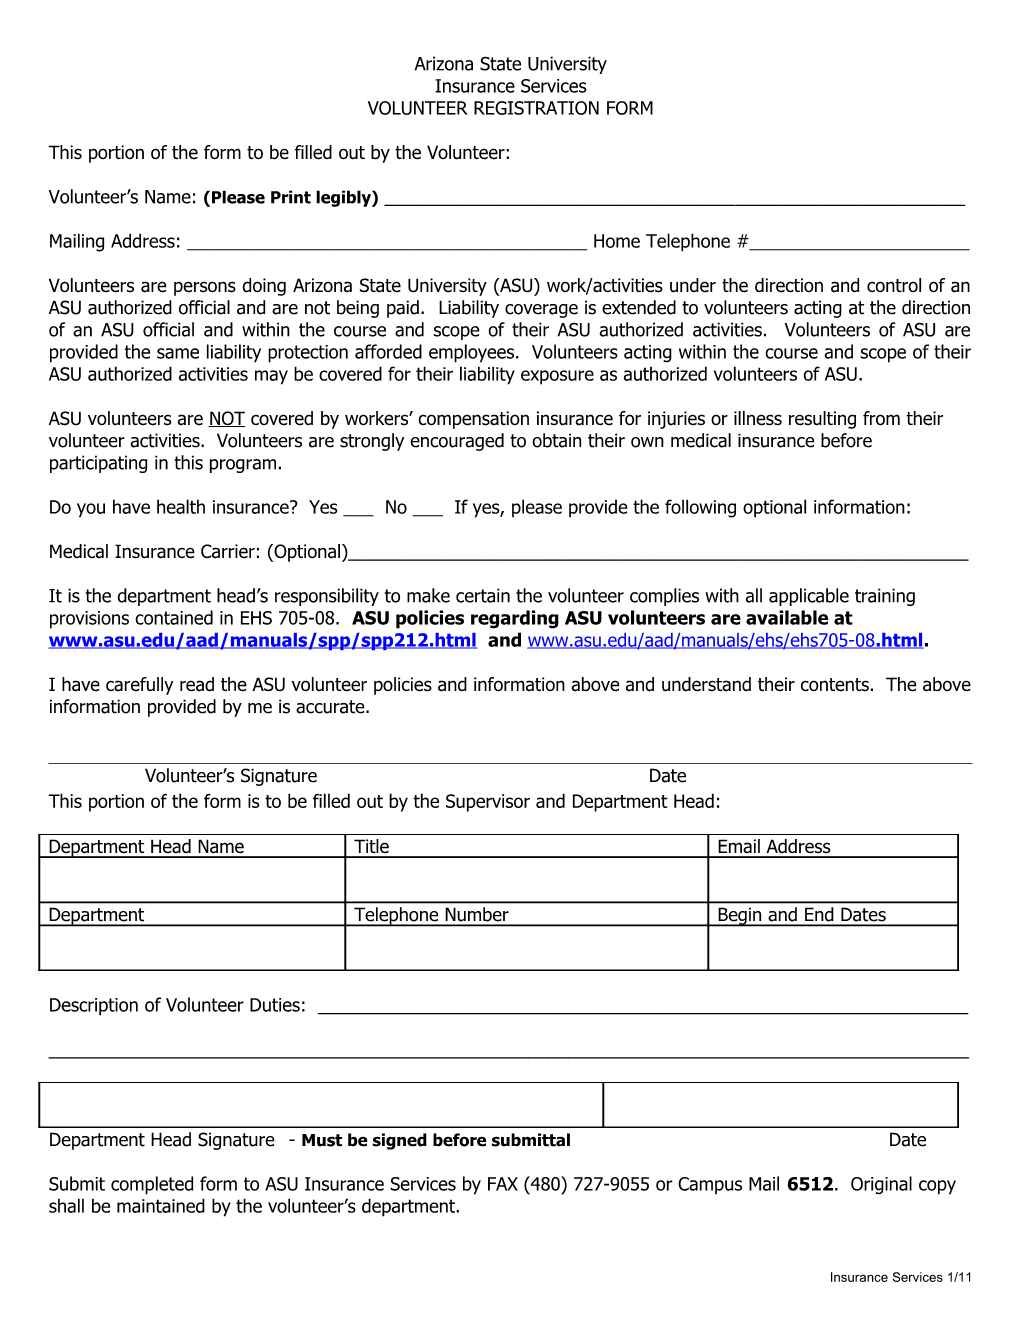 Volunteer Registration Form s1